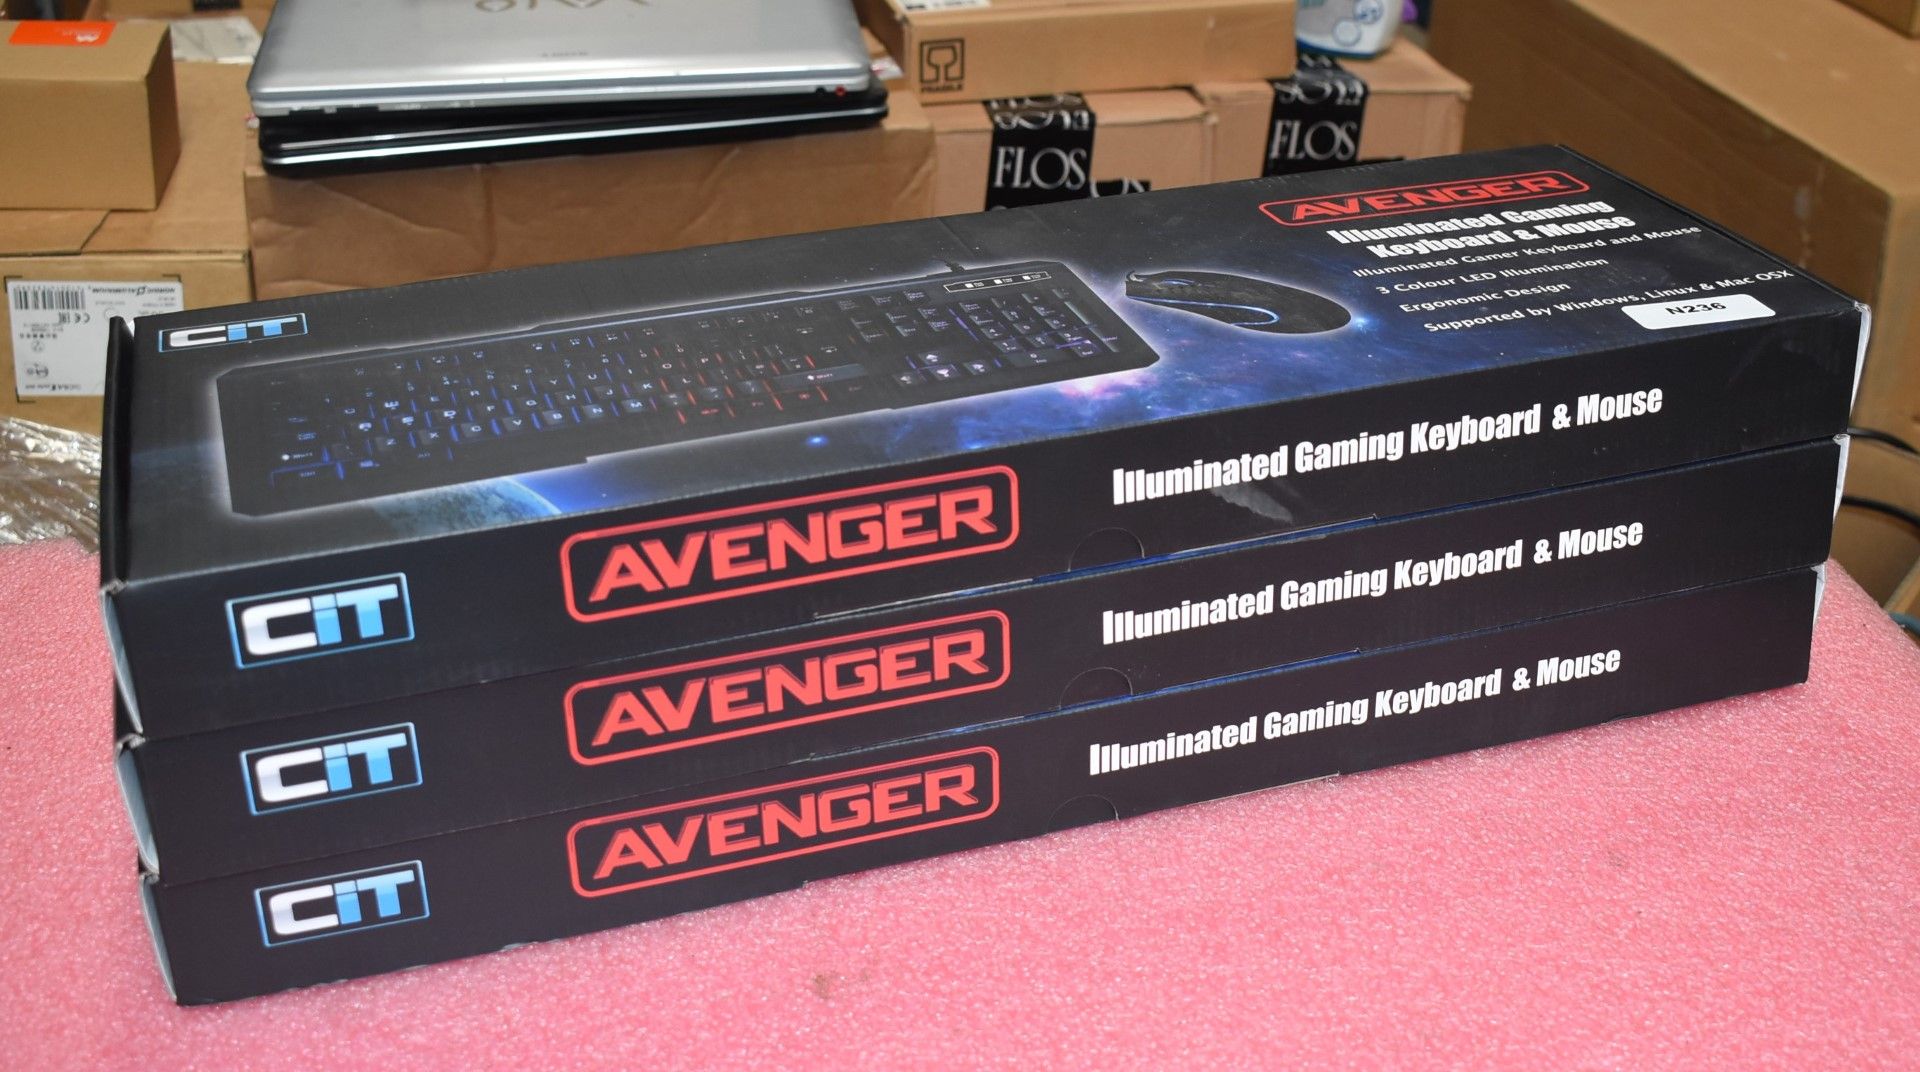 3 x CIT Avenger Illuminated Gaming Keyboard and Mouse - New & Boxed - Image 3 of 7